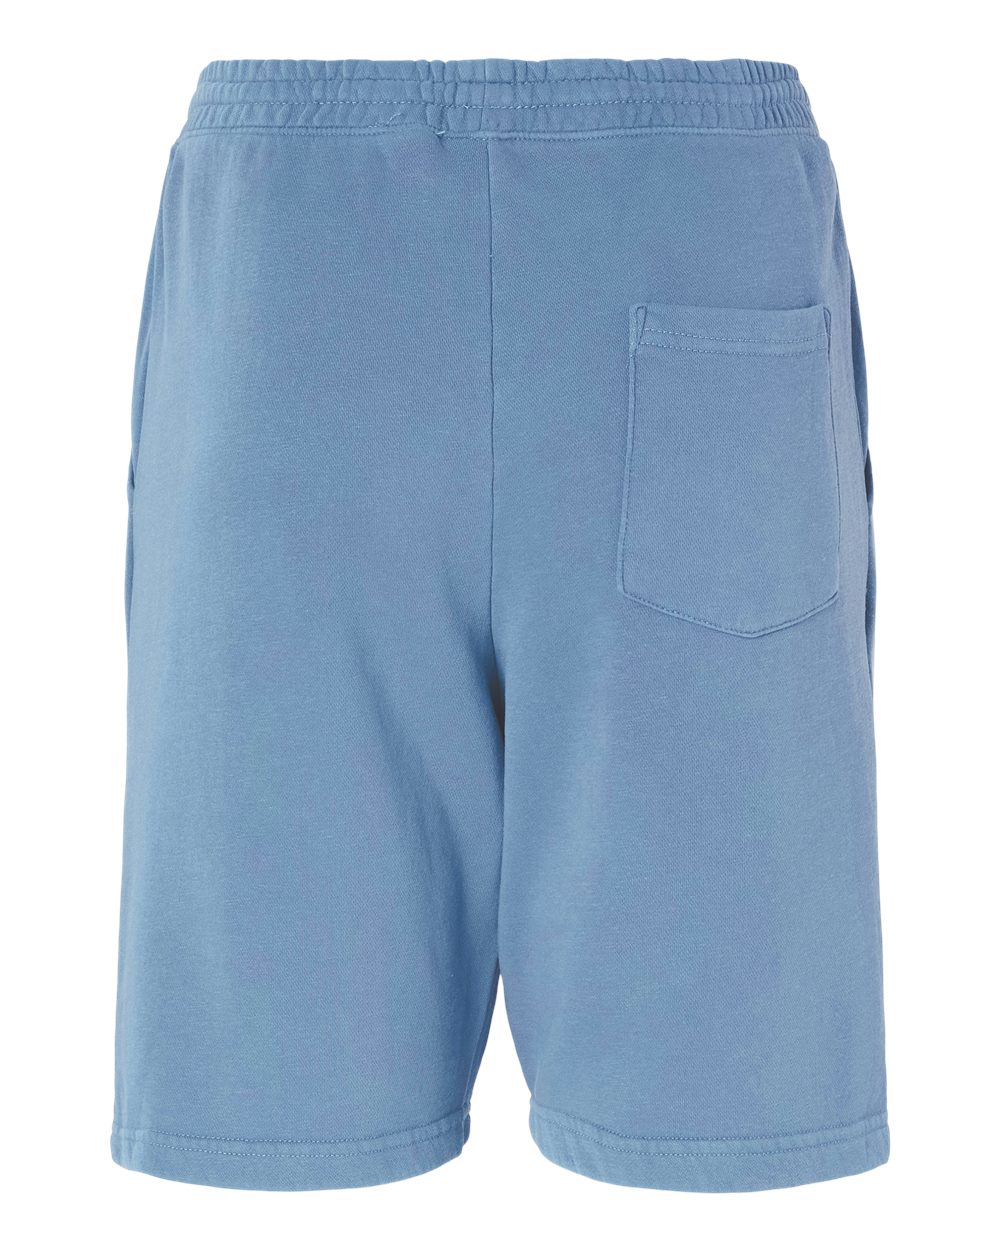 SOULSKY Men's Fleece Shorts (Light Blue)